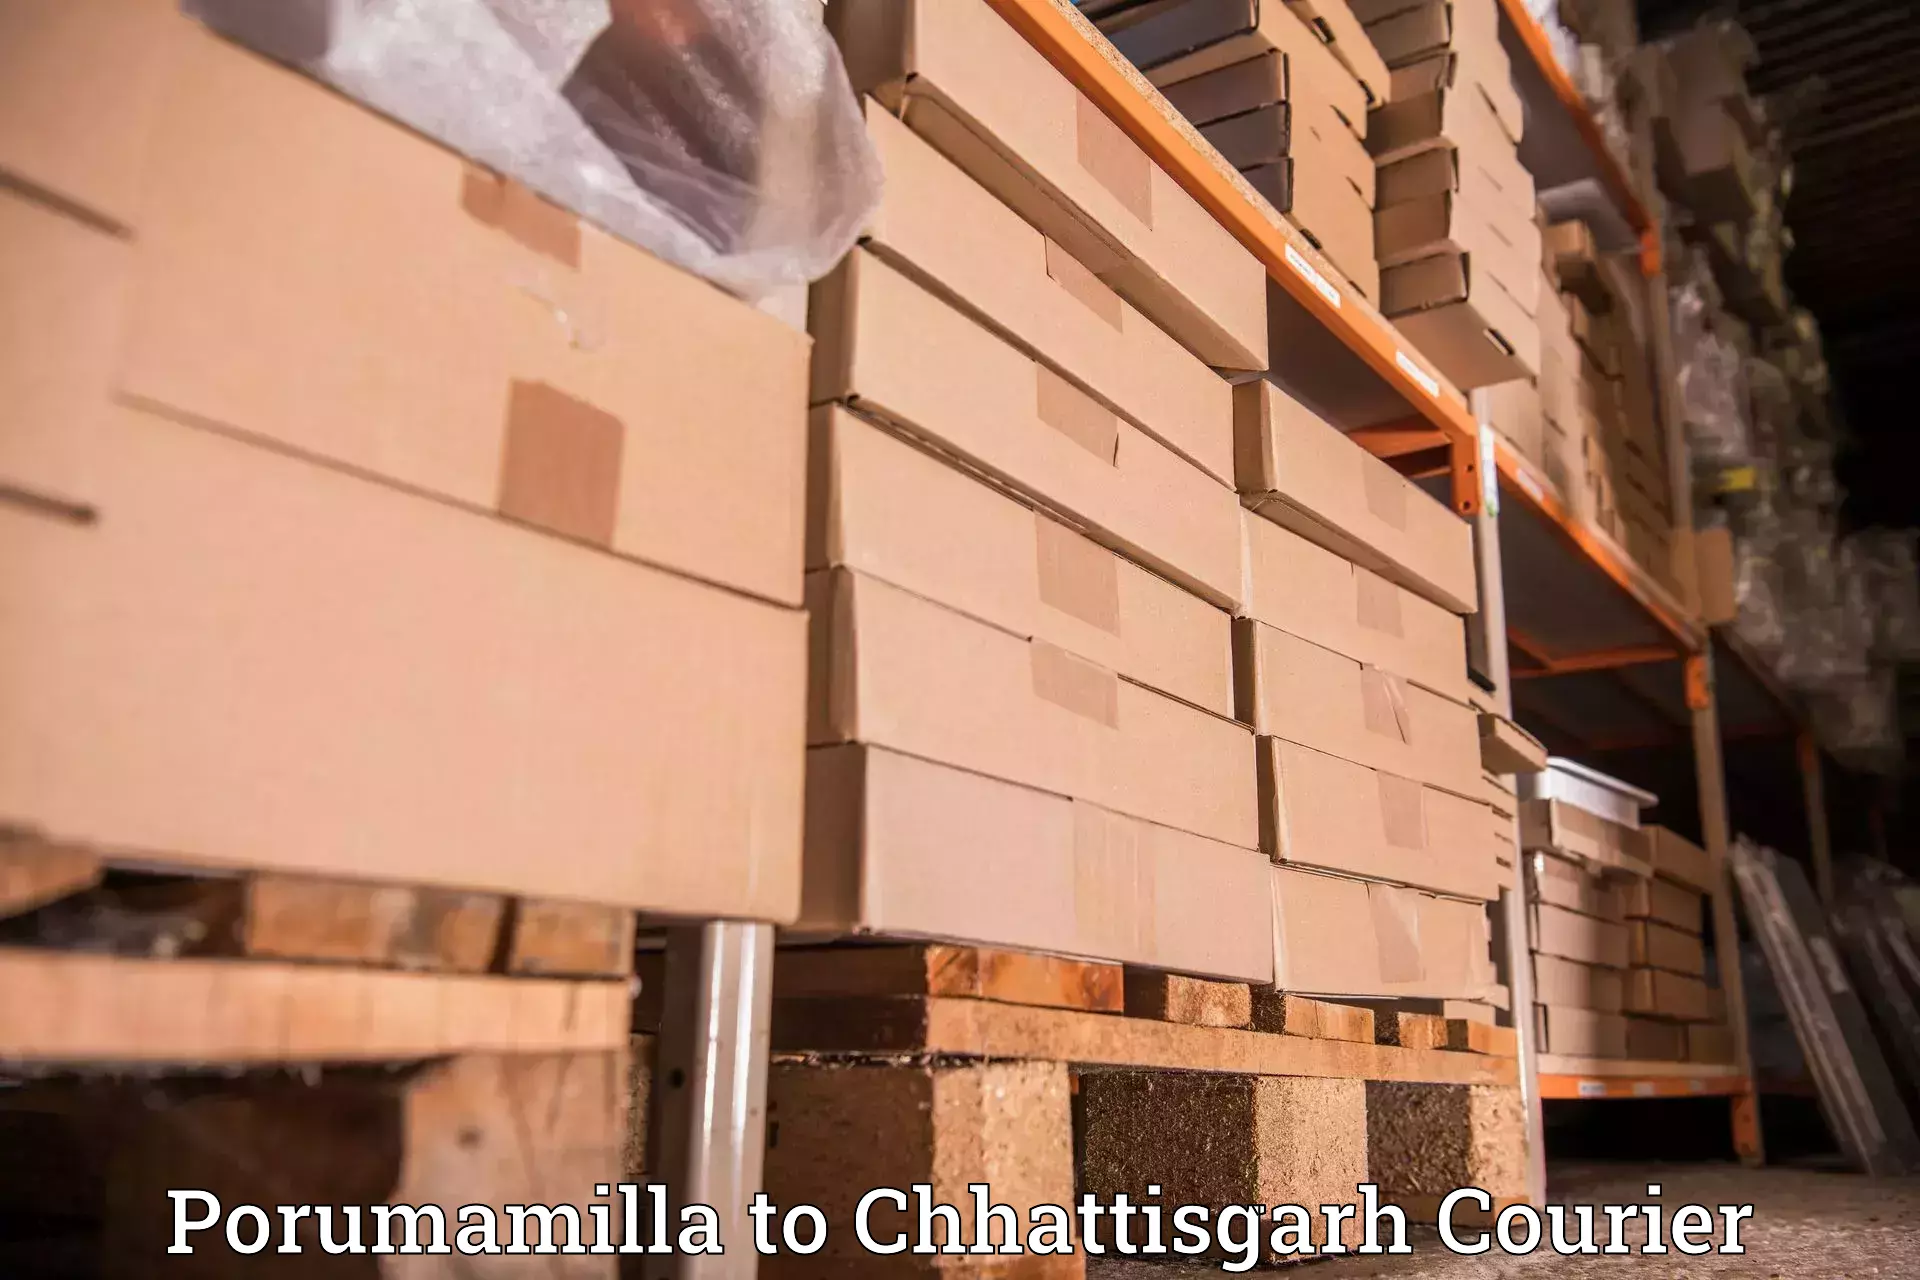 Reliable delivery network Porumamilla to Charama